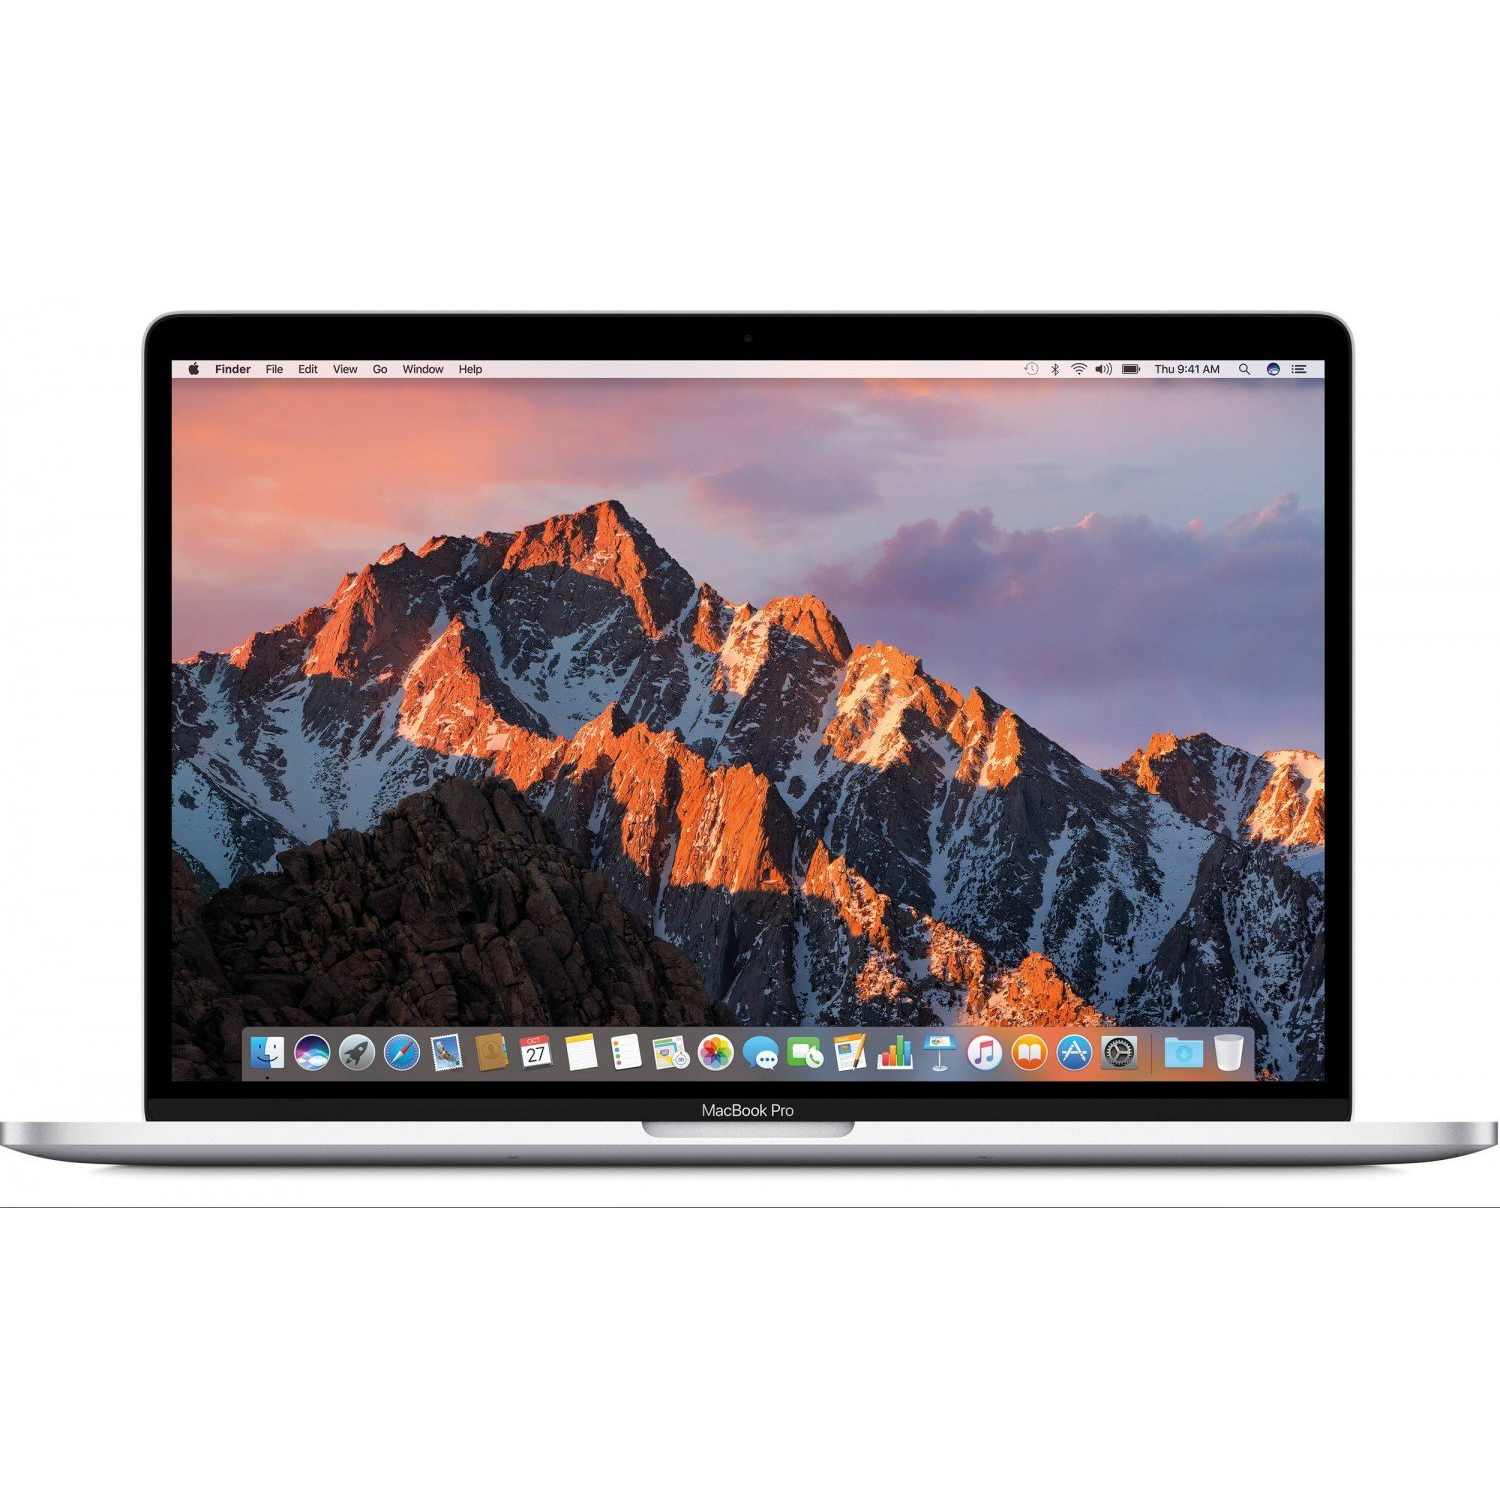 Refurbished(Good) - Apple MacBook Pro 2019, 15" Retina Display, Intel i7-9750H @ 2.6GHz, 32GB RAM, 256GB NVME, Mac OS